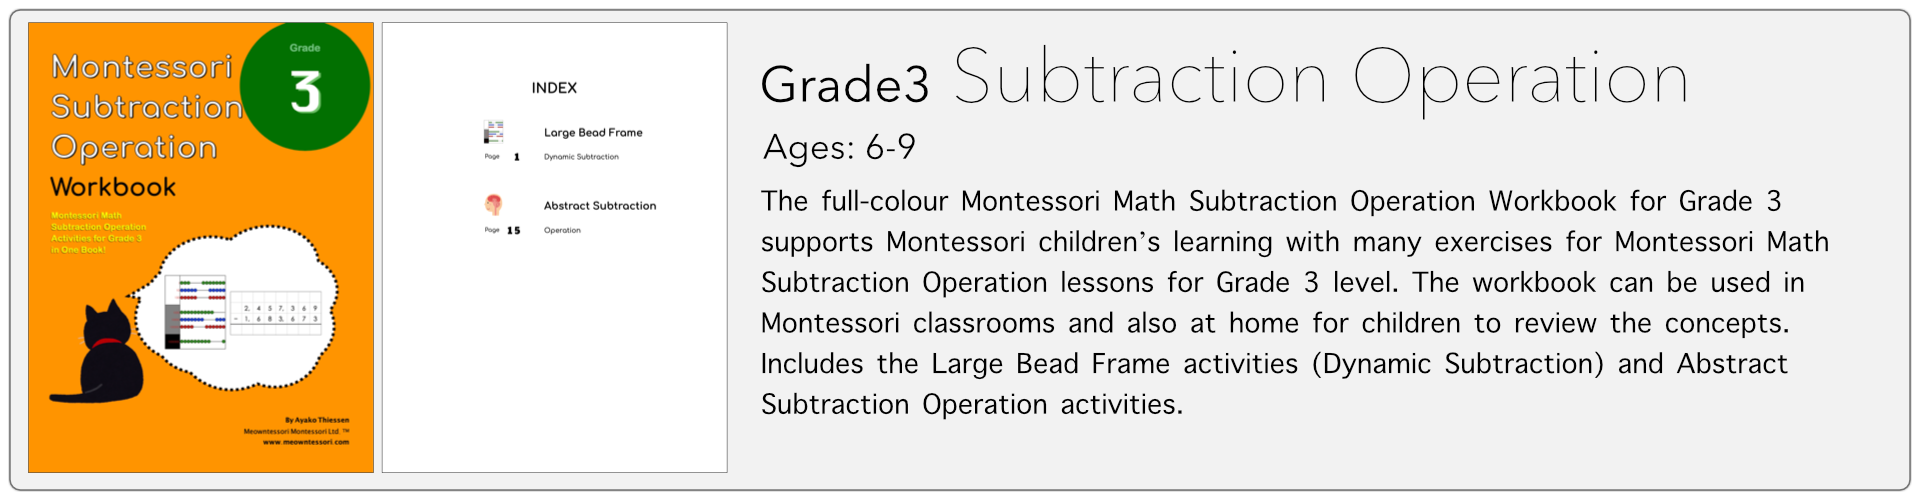 grade3 subtraction operation